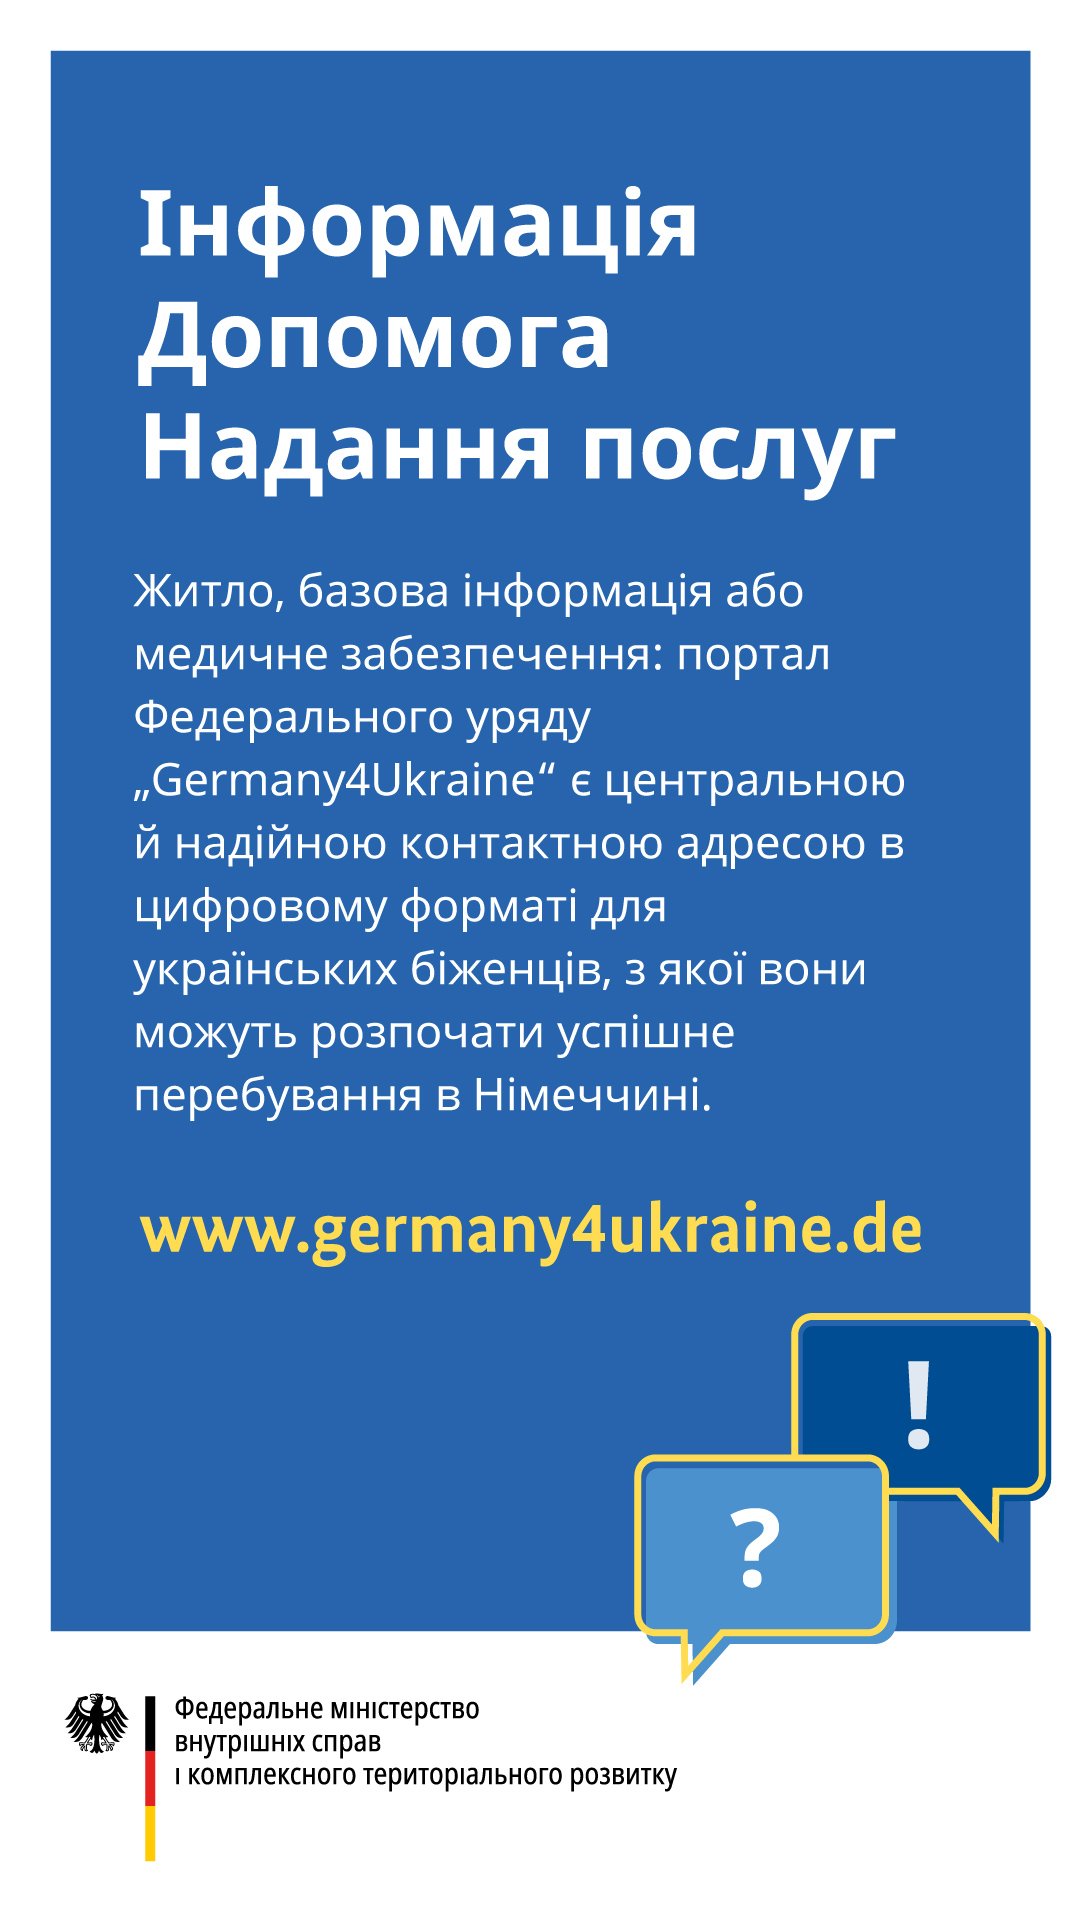 Banner: Germany4Ukraine